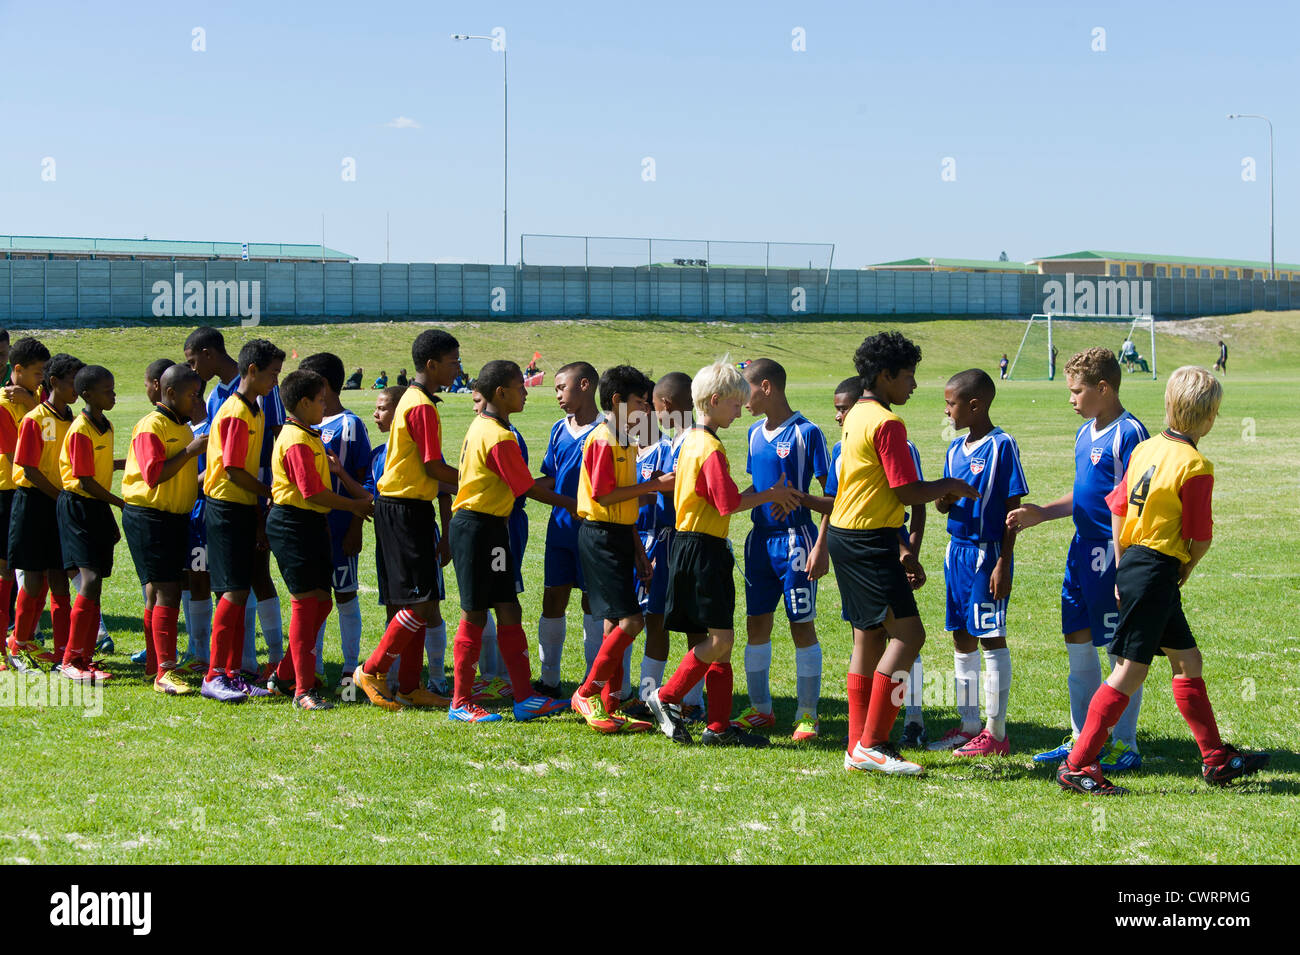 Equipo juvenil de fútbol en el torneo Strandfontain, Cape Town, Sudáfrica Foto de stock